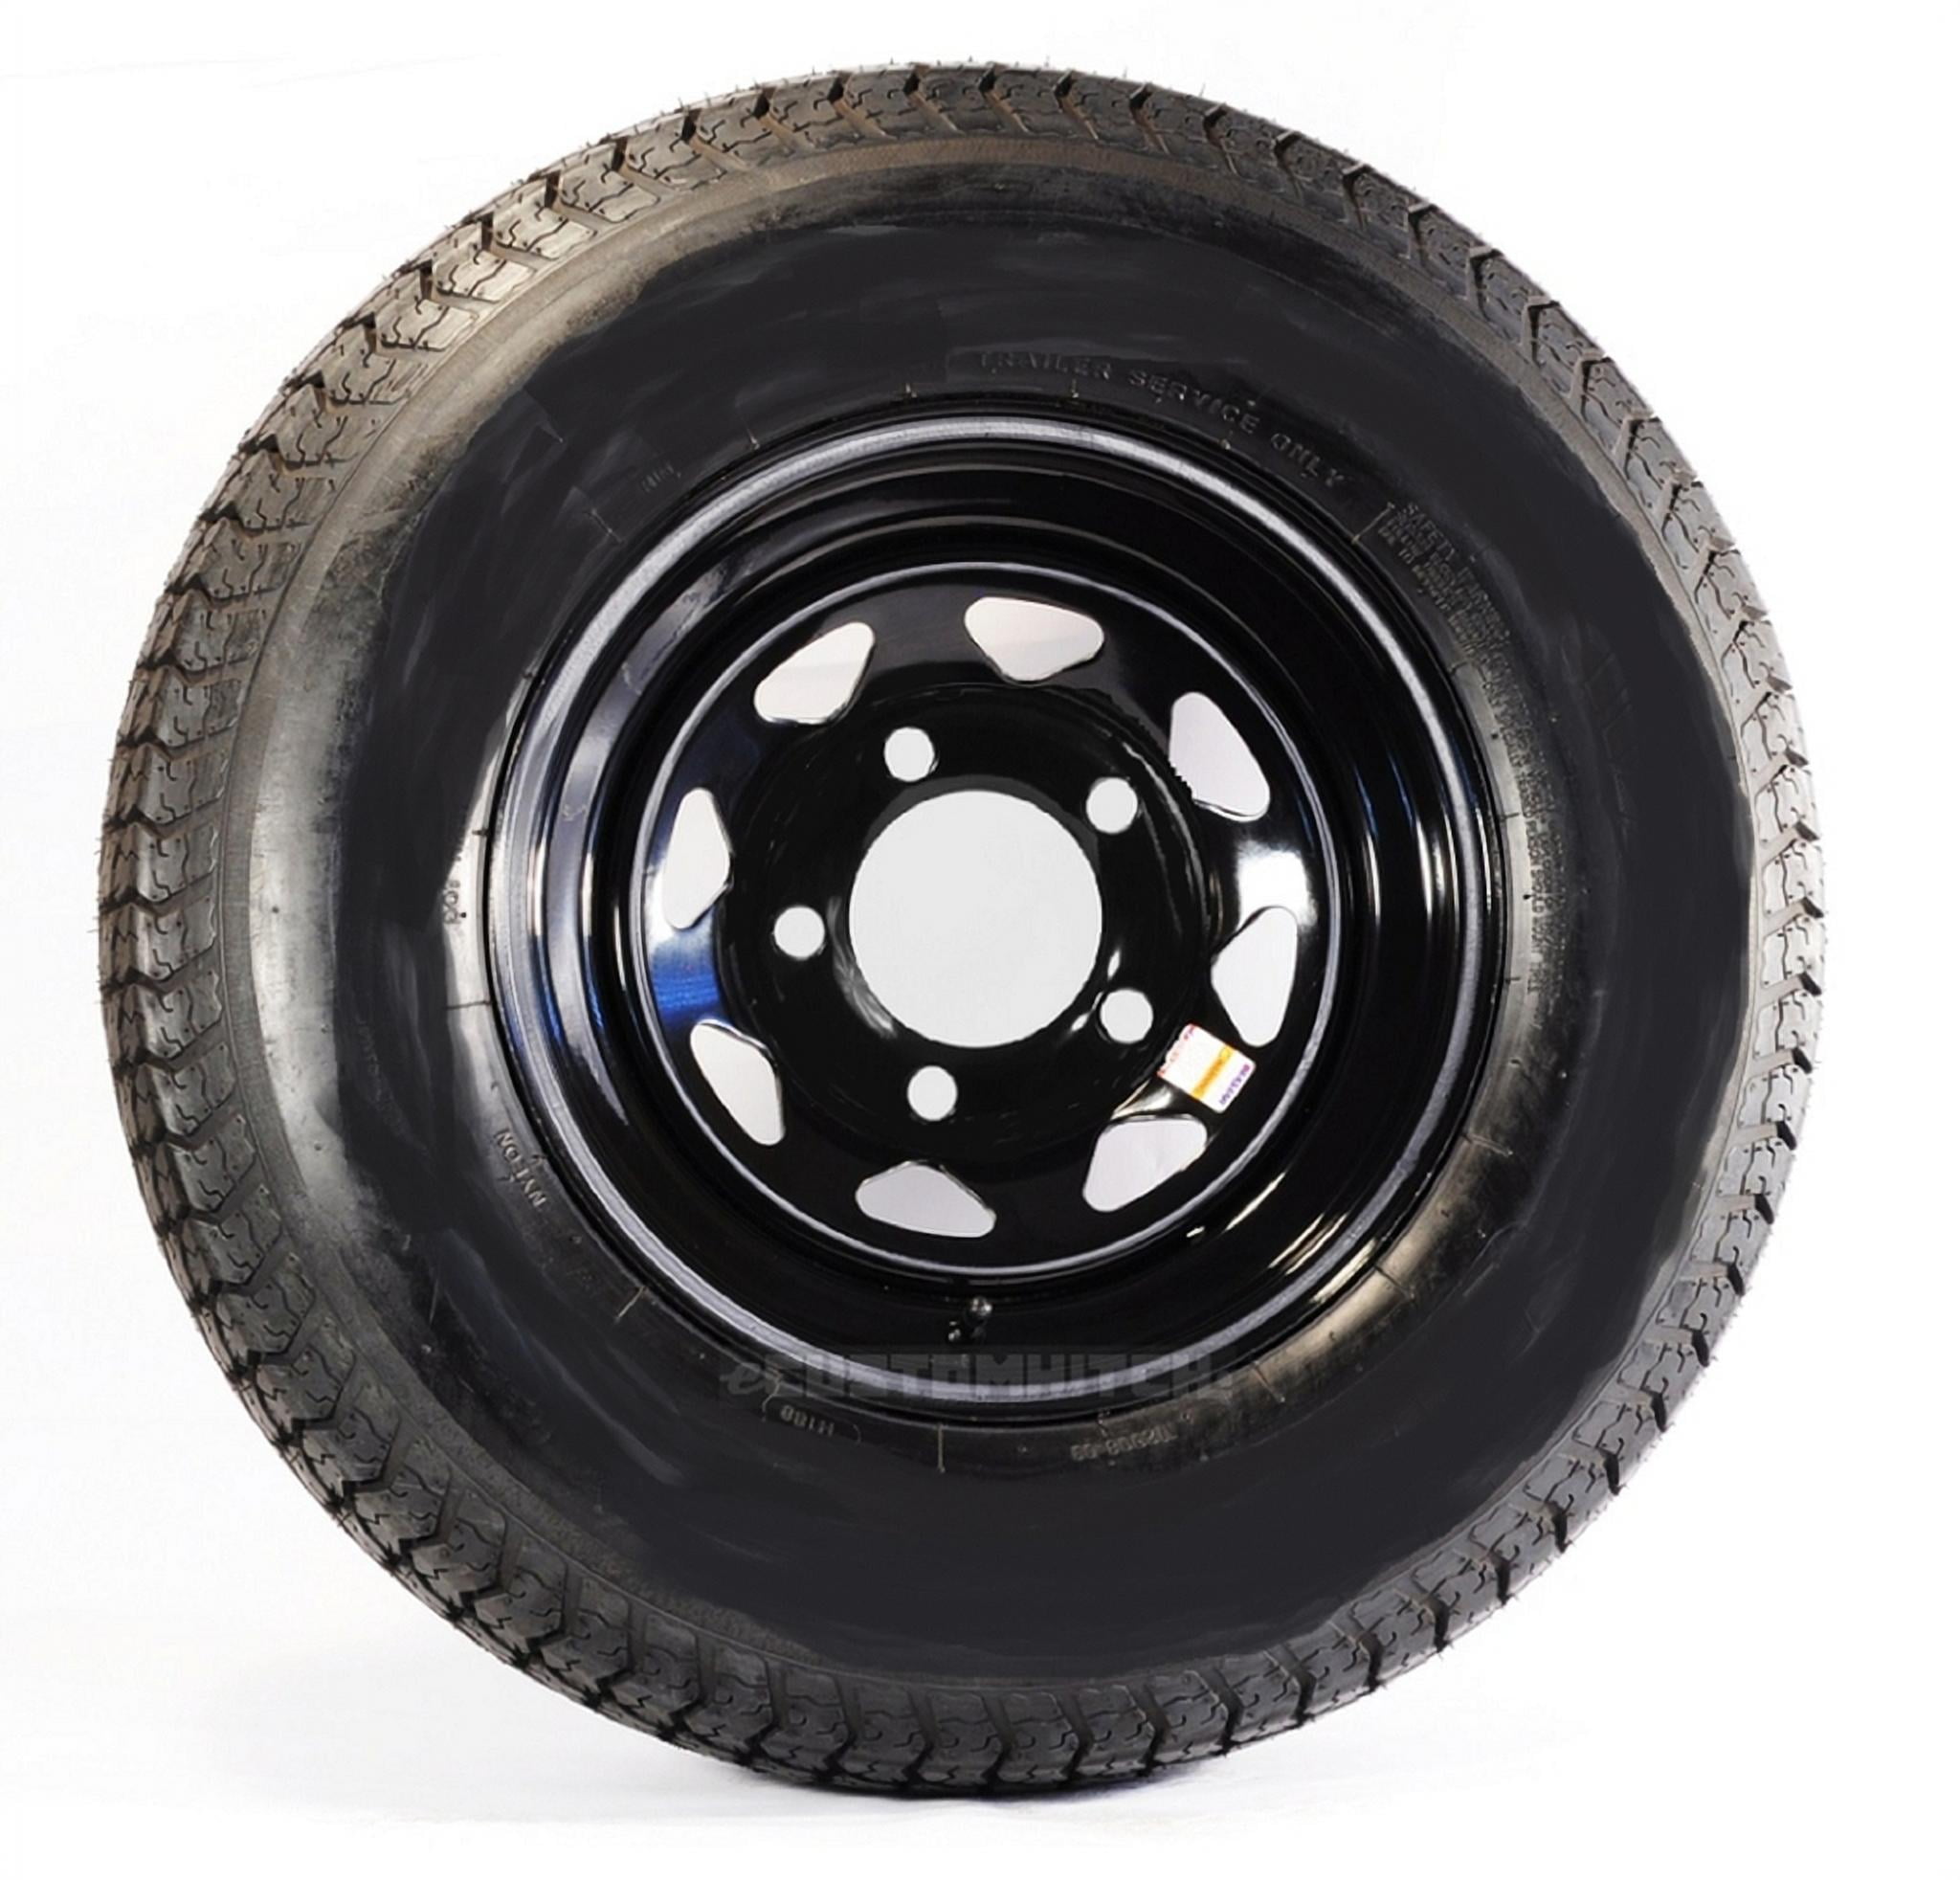 Load C 5 Lug Black Spoke Trailer Tire On Rim ST205/75D15 15 in 